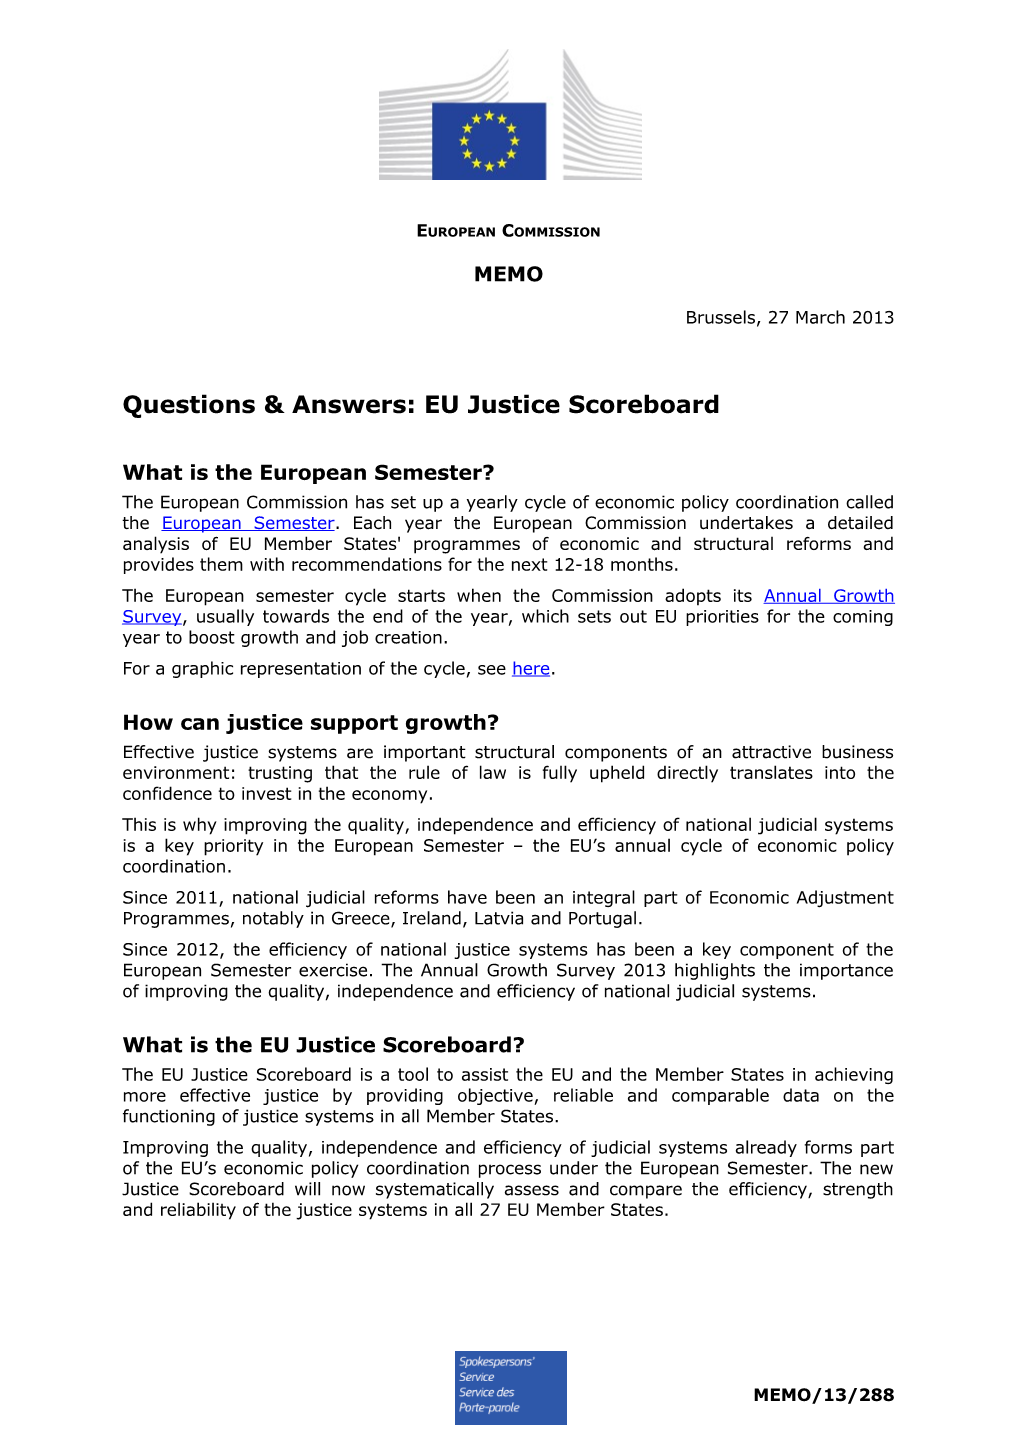 Questions & Answers: EU Justice Scoreboard